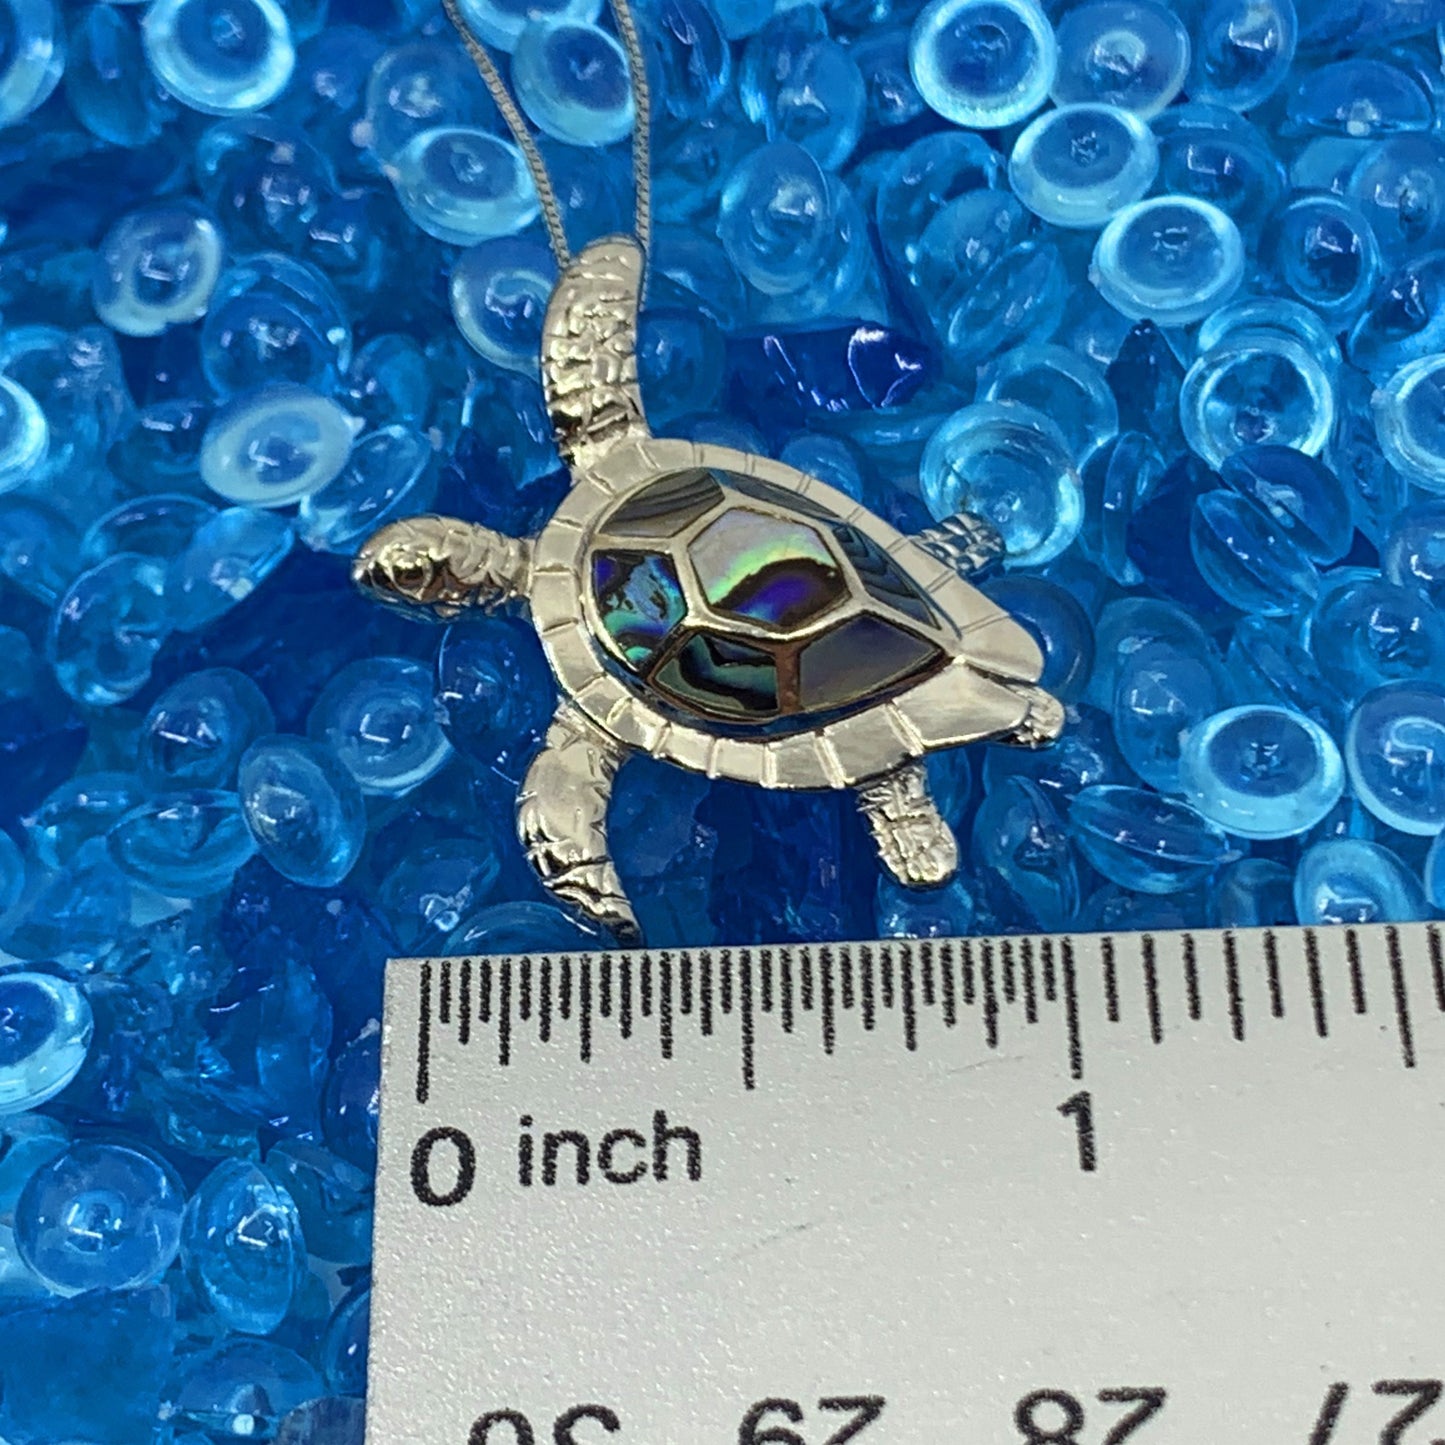 Mother of Pearl Honu Turtle Pendant on adjustable chain